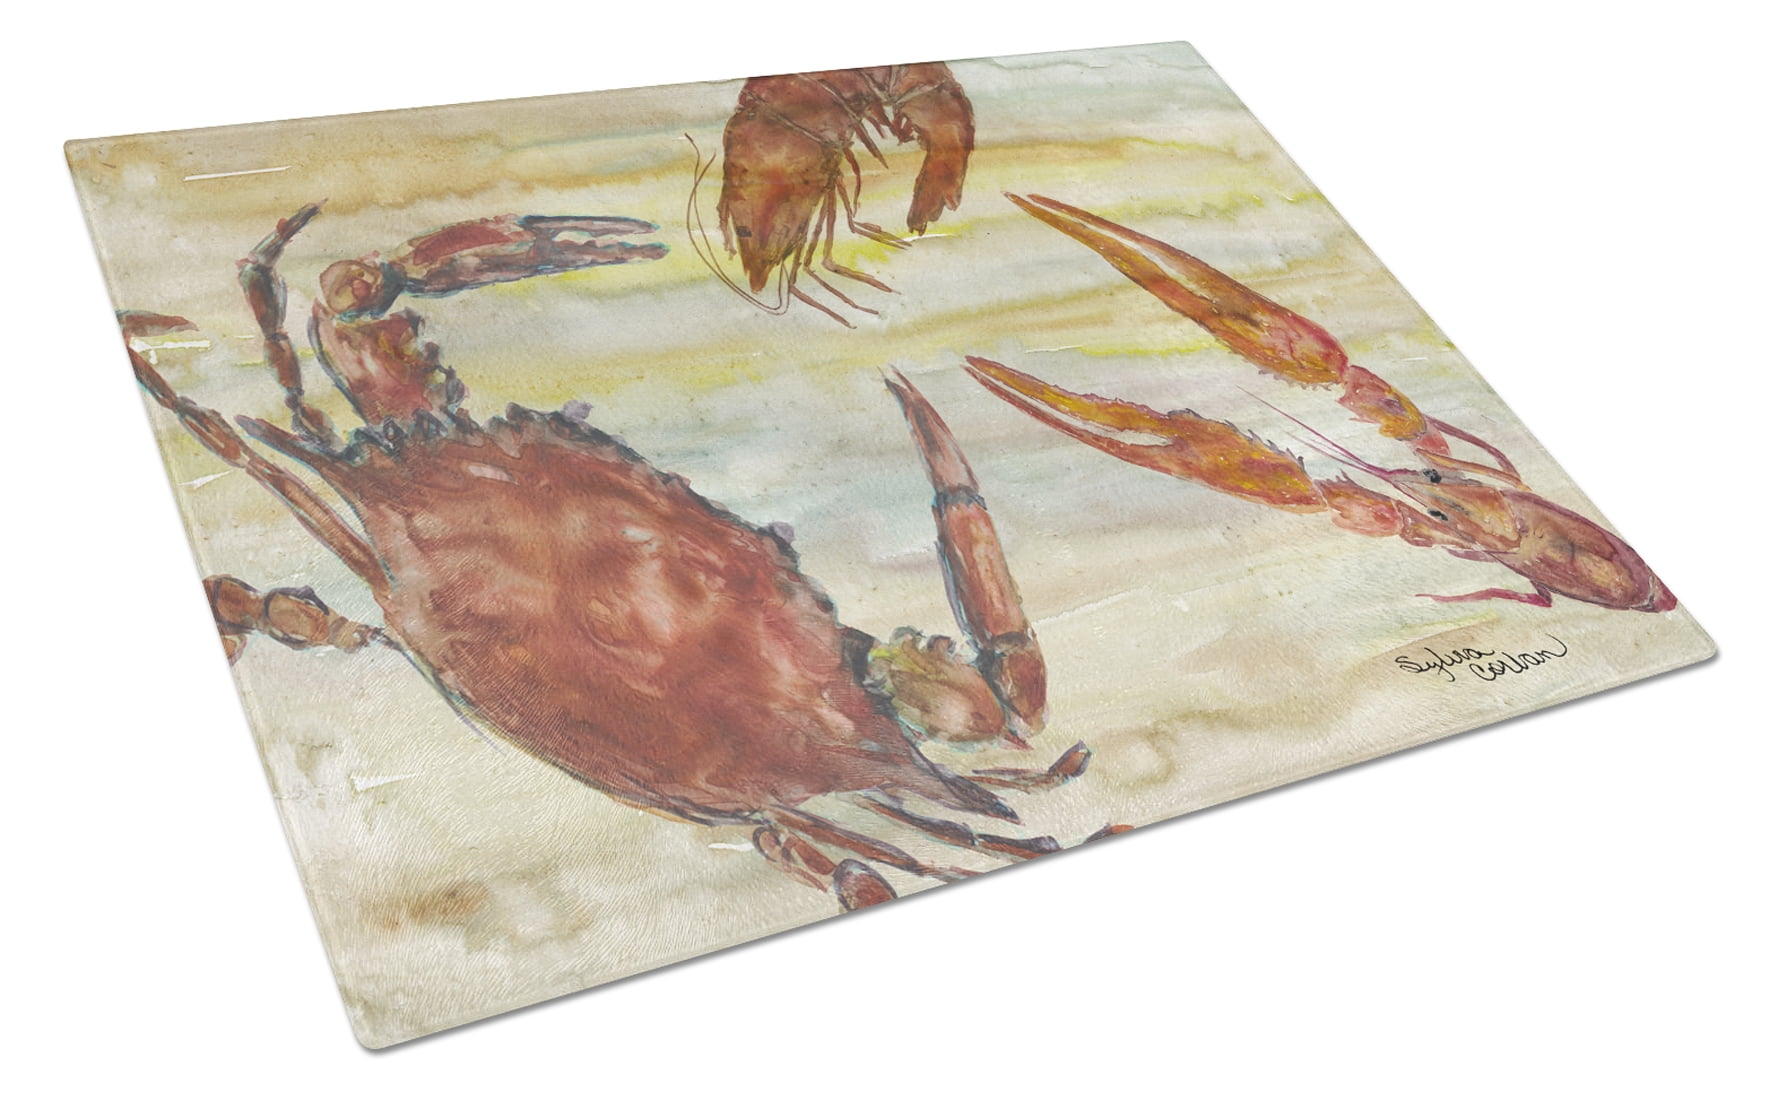 Carolines Treasures Crab and Shrimp Checkerboard Glass Cutting Board Large Multicolor 